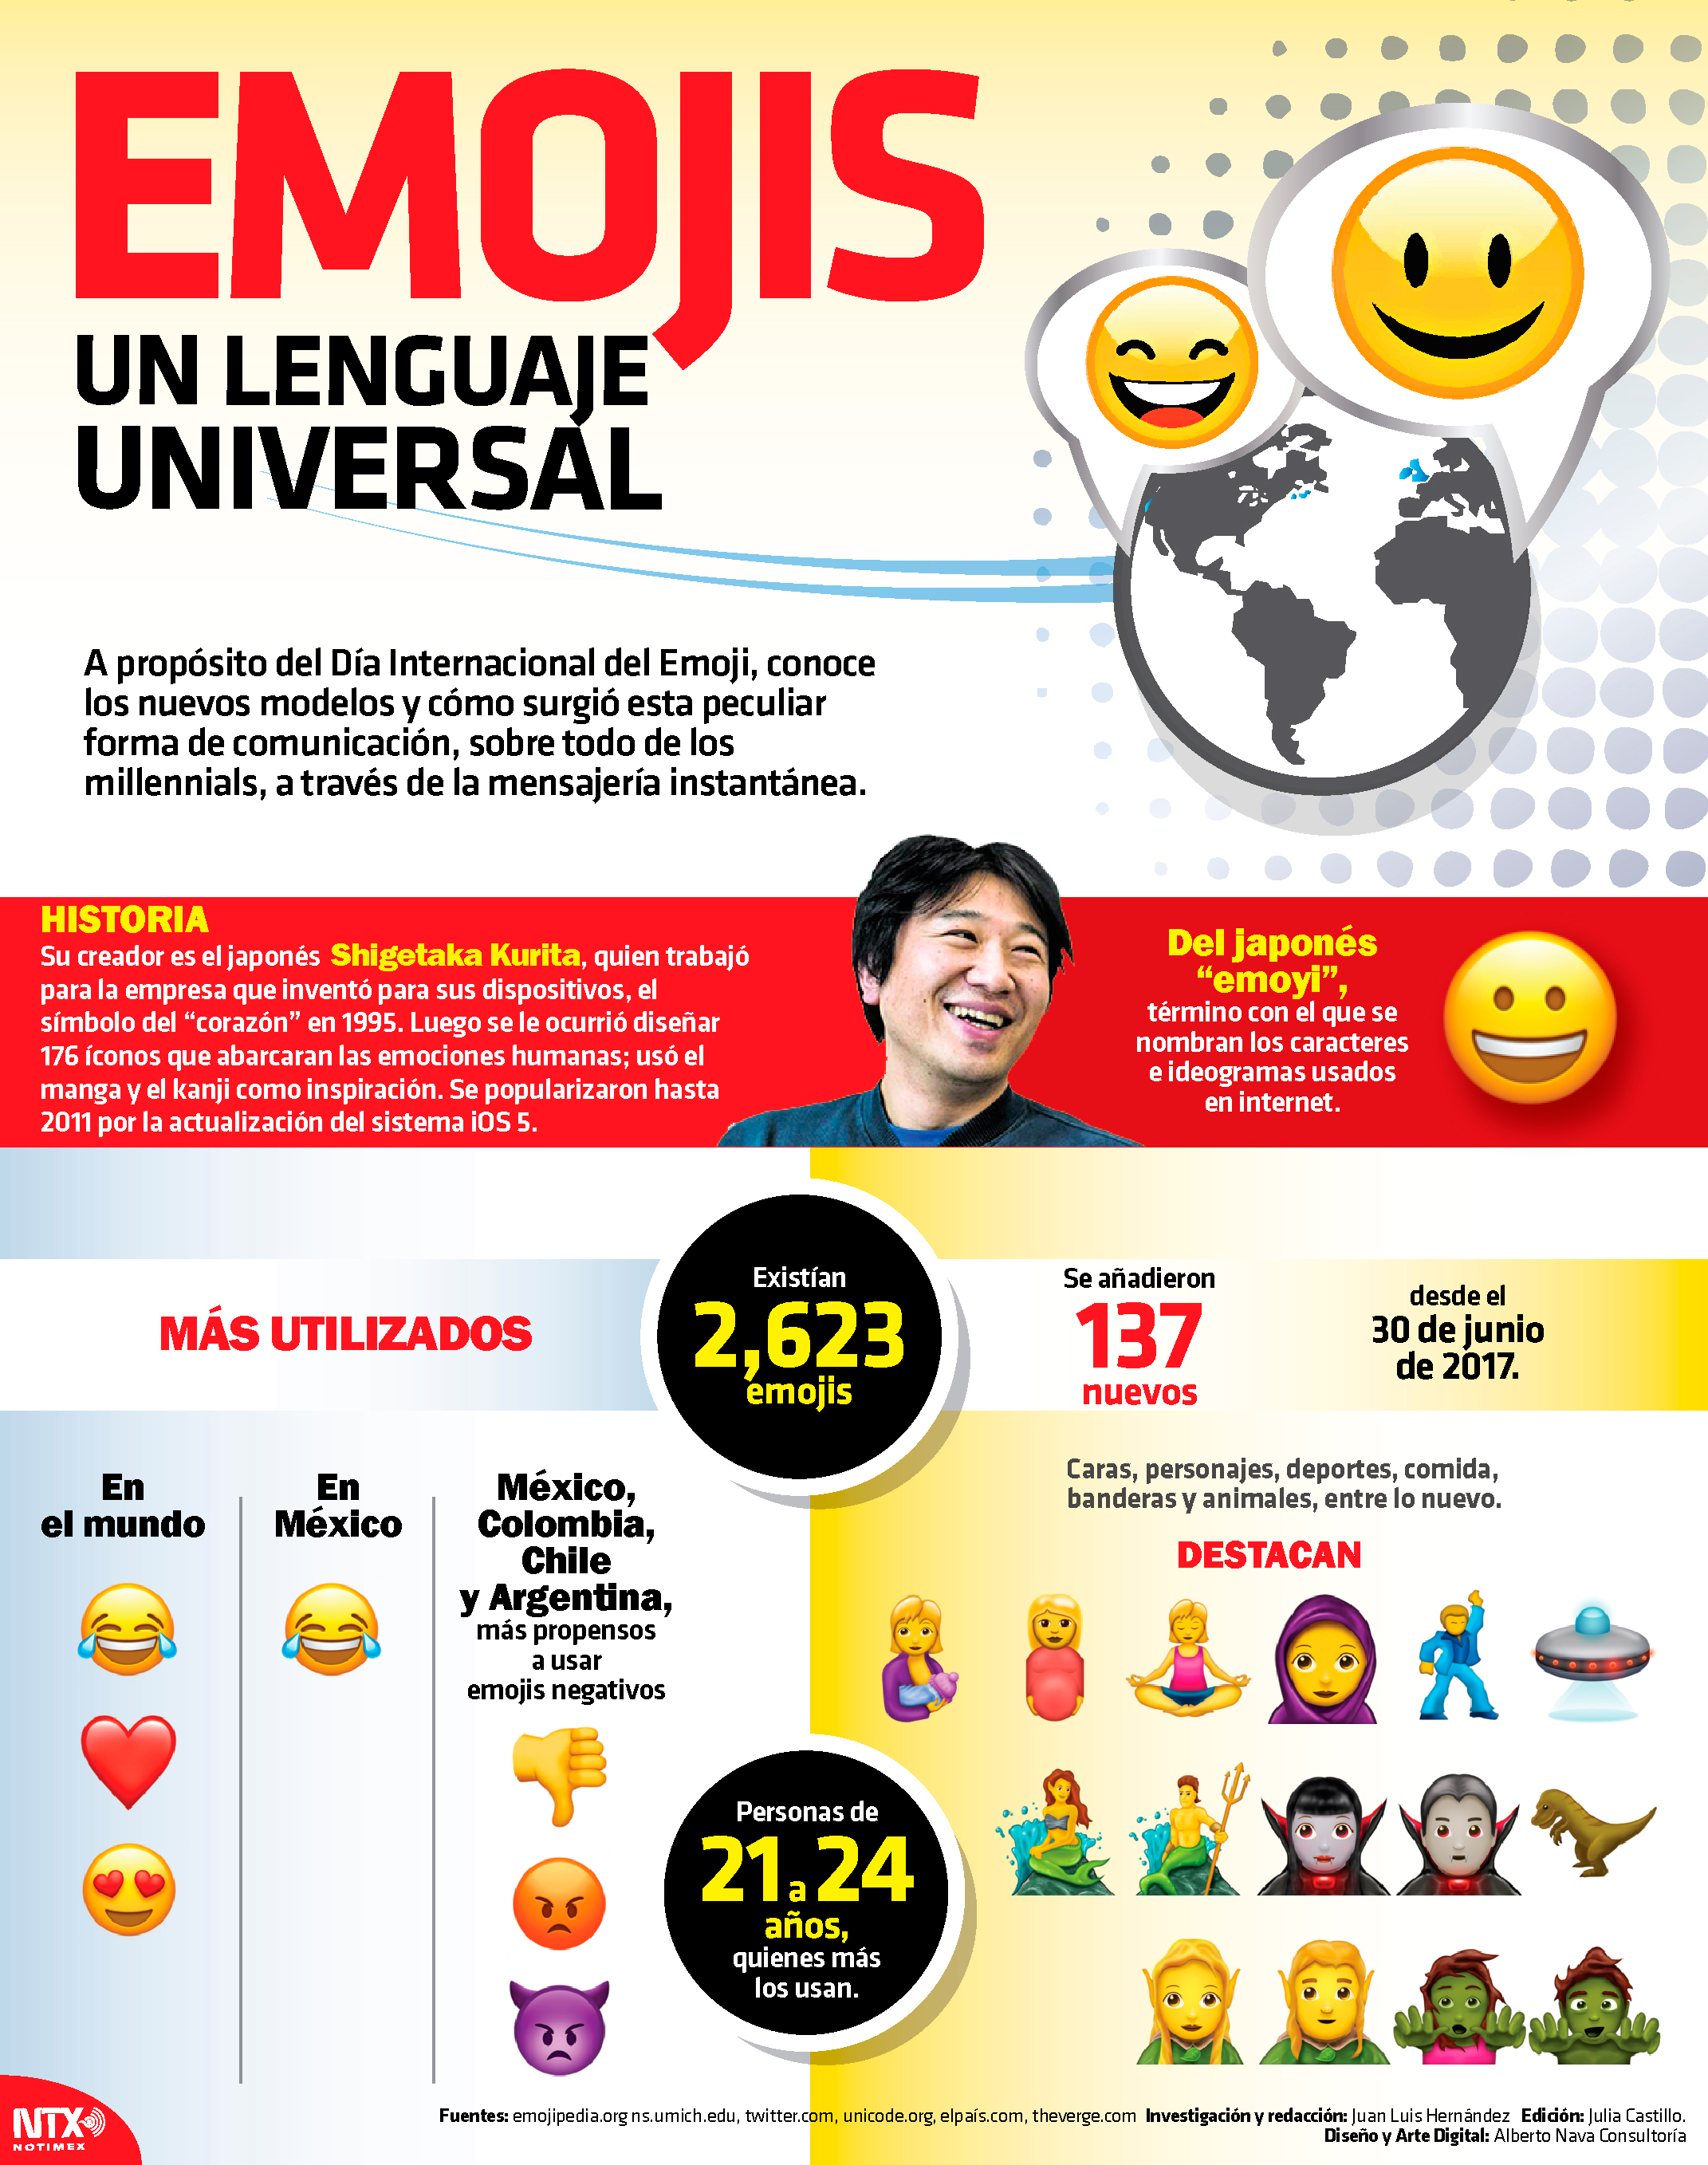 Emojis, un lenguaje universal